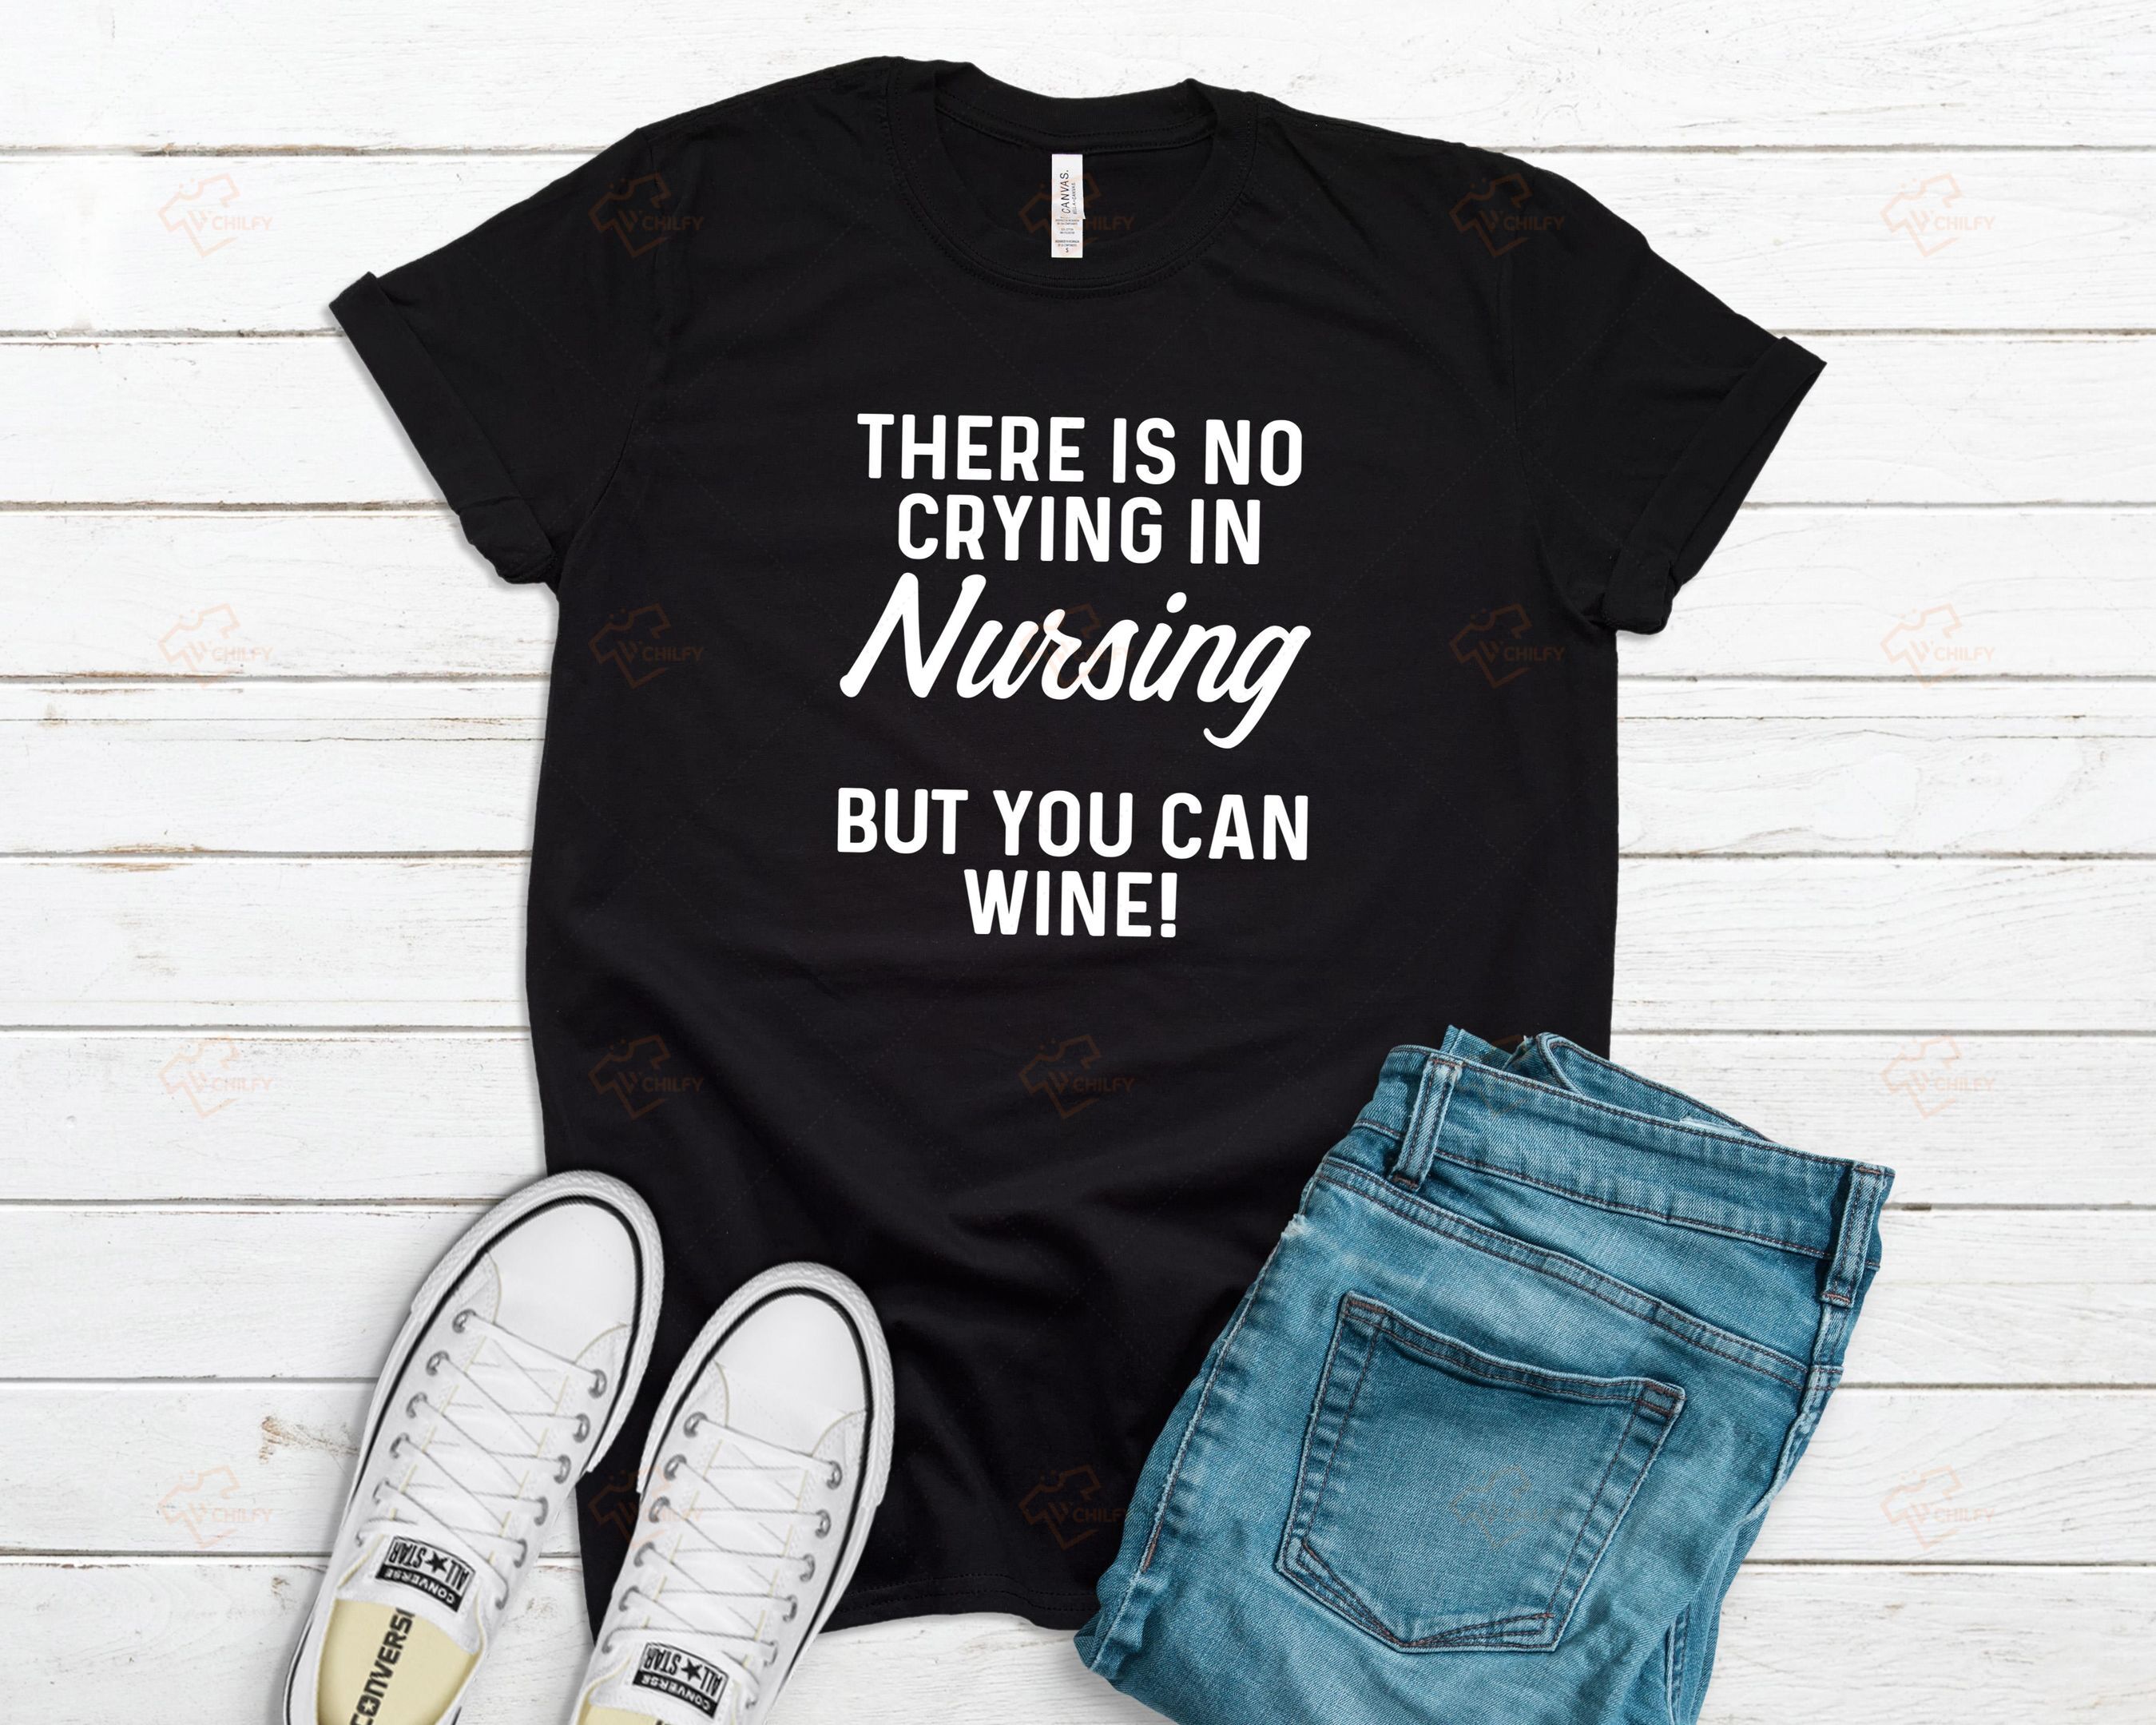 No Crying In Nursing Shirt, Nurse Shirt, Gift For Nurse, Nursing Job Shirt, Nurse Appreciation